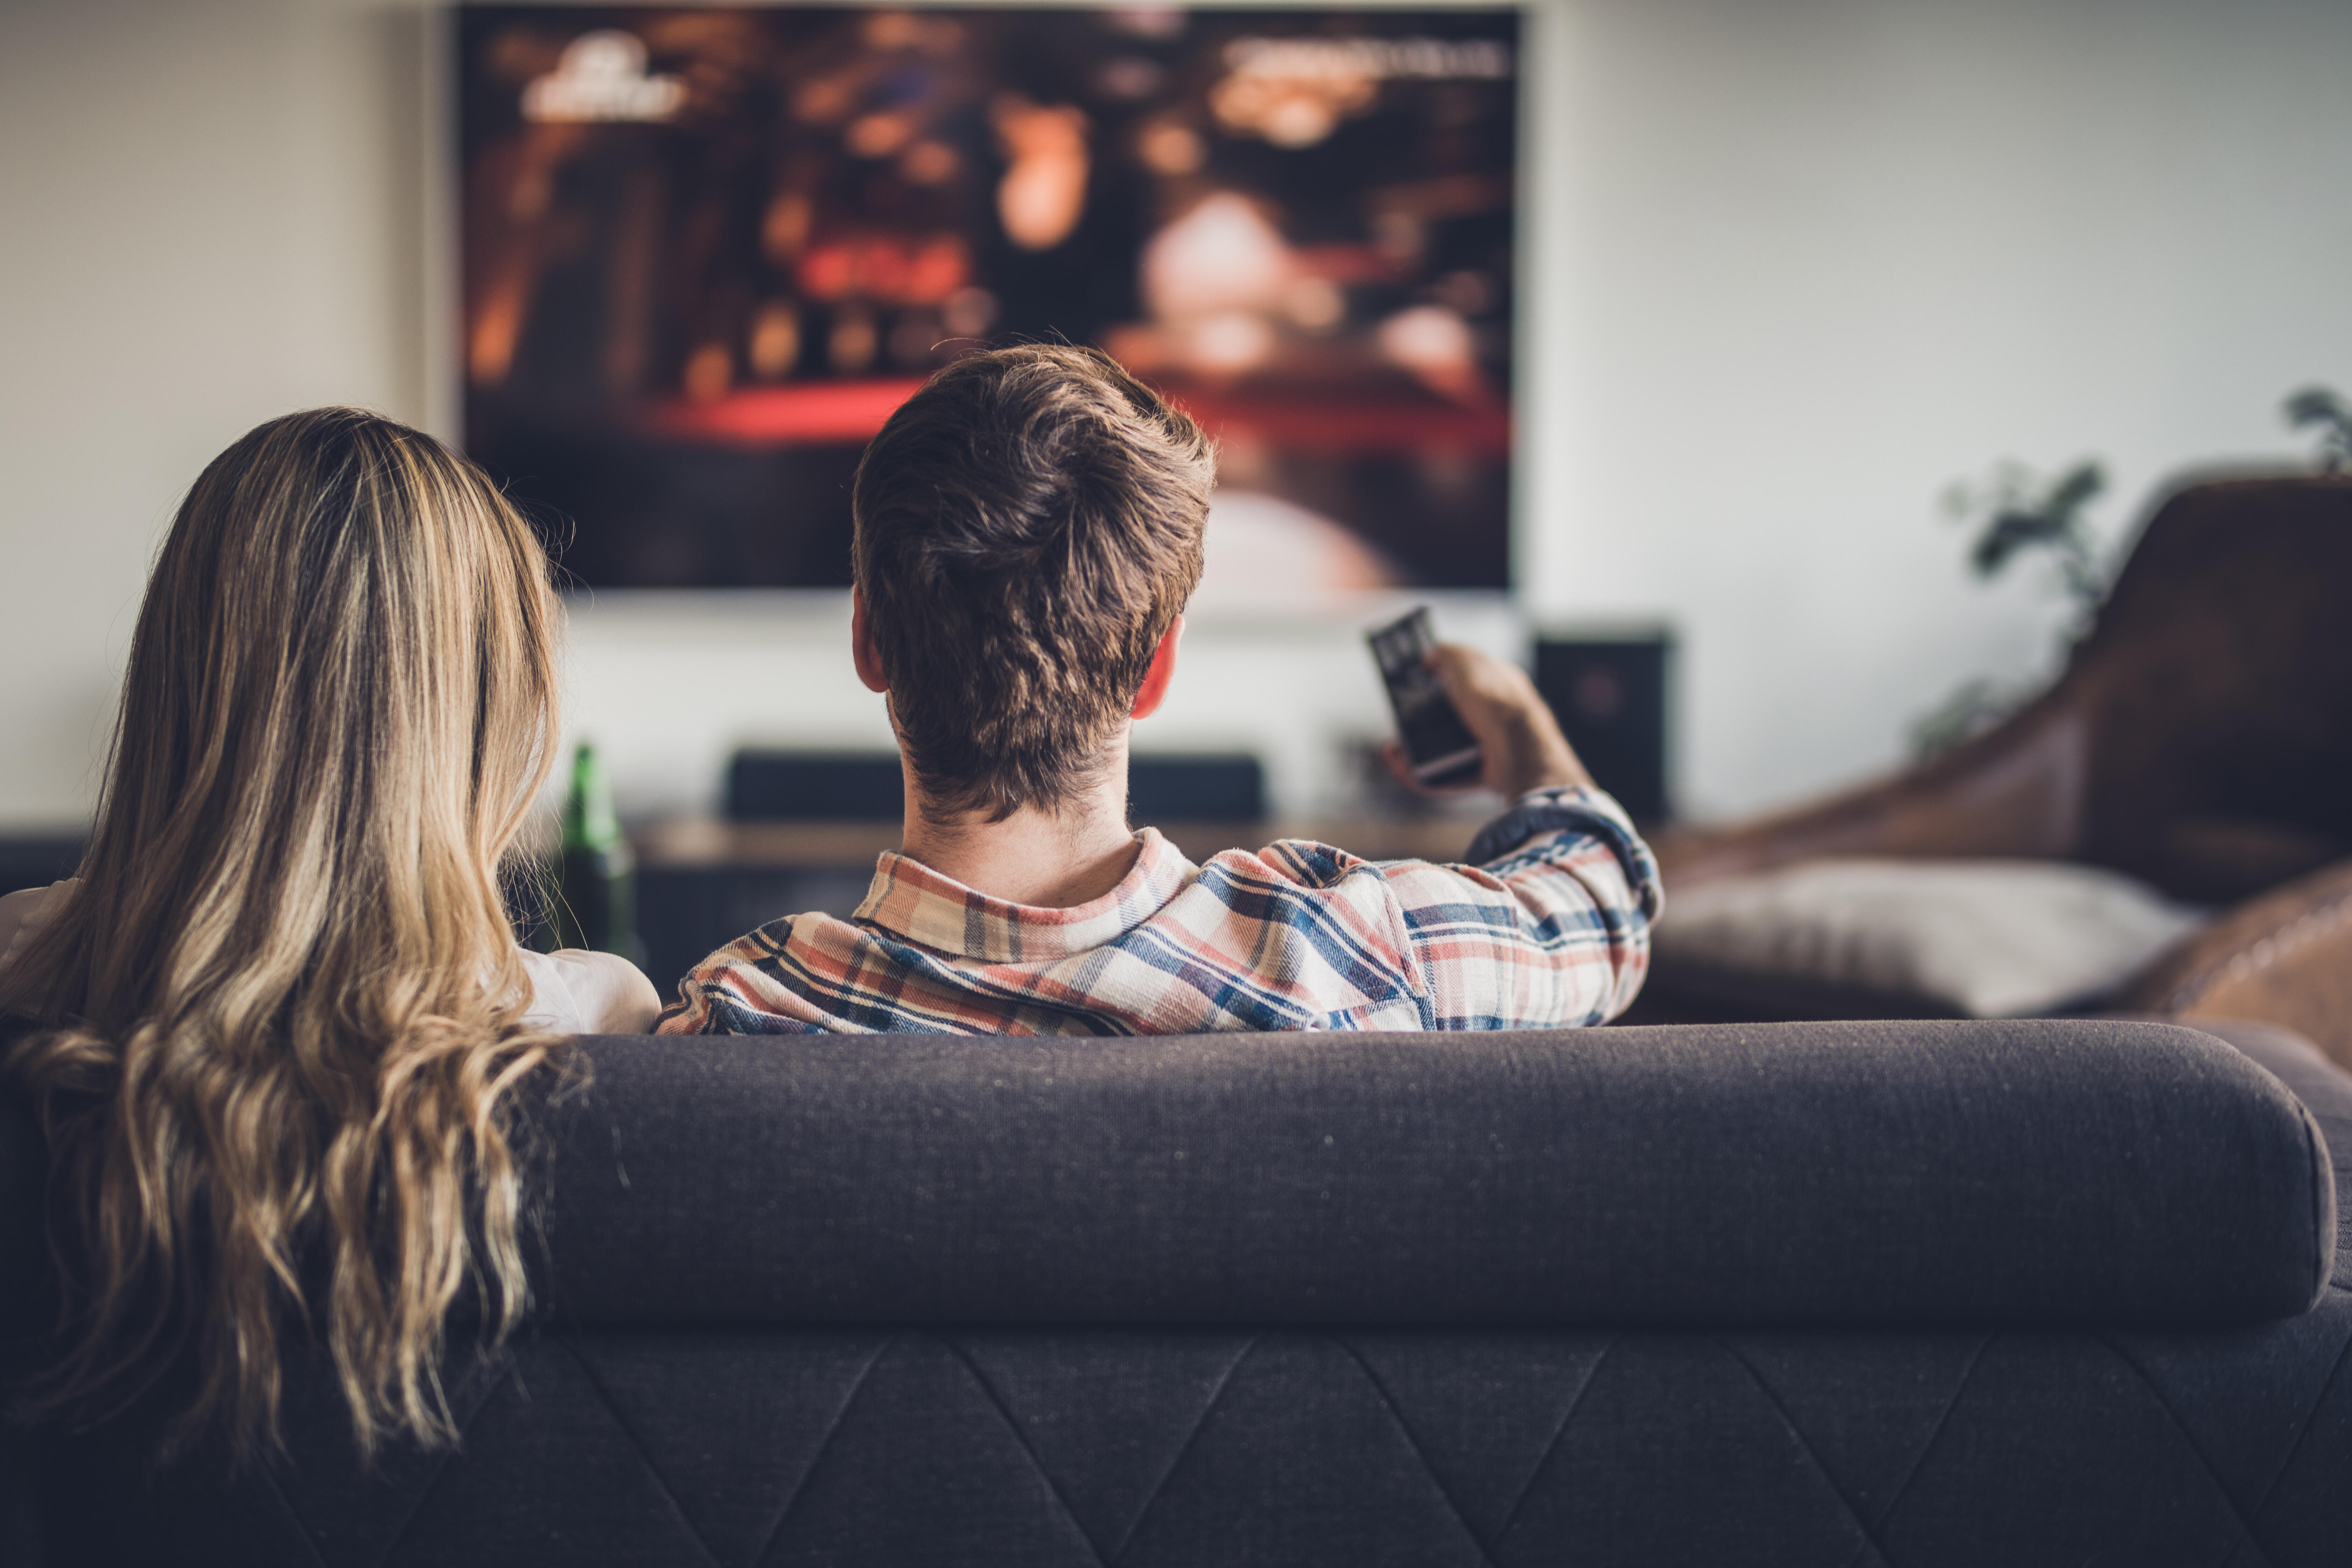 Вместе смотрят телевизор. Пара у телевизора. Человек телевизор. Пара смотрит телевизор. Пара в кинотеатре.